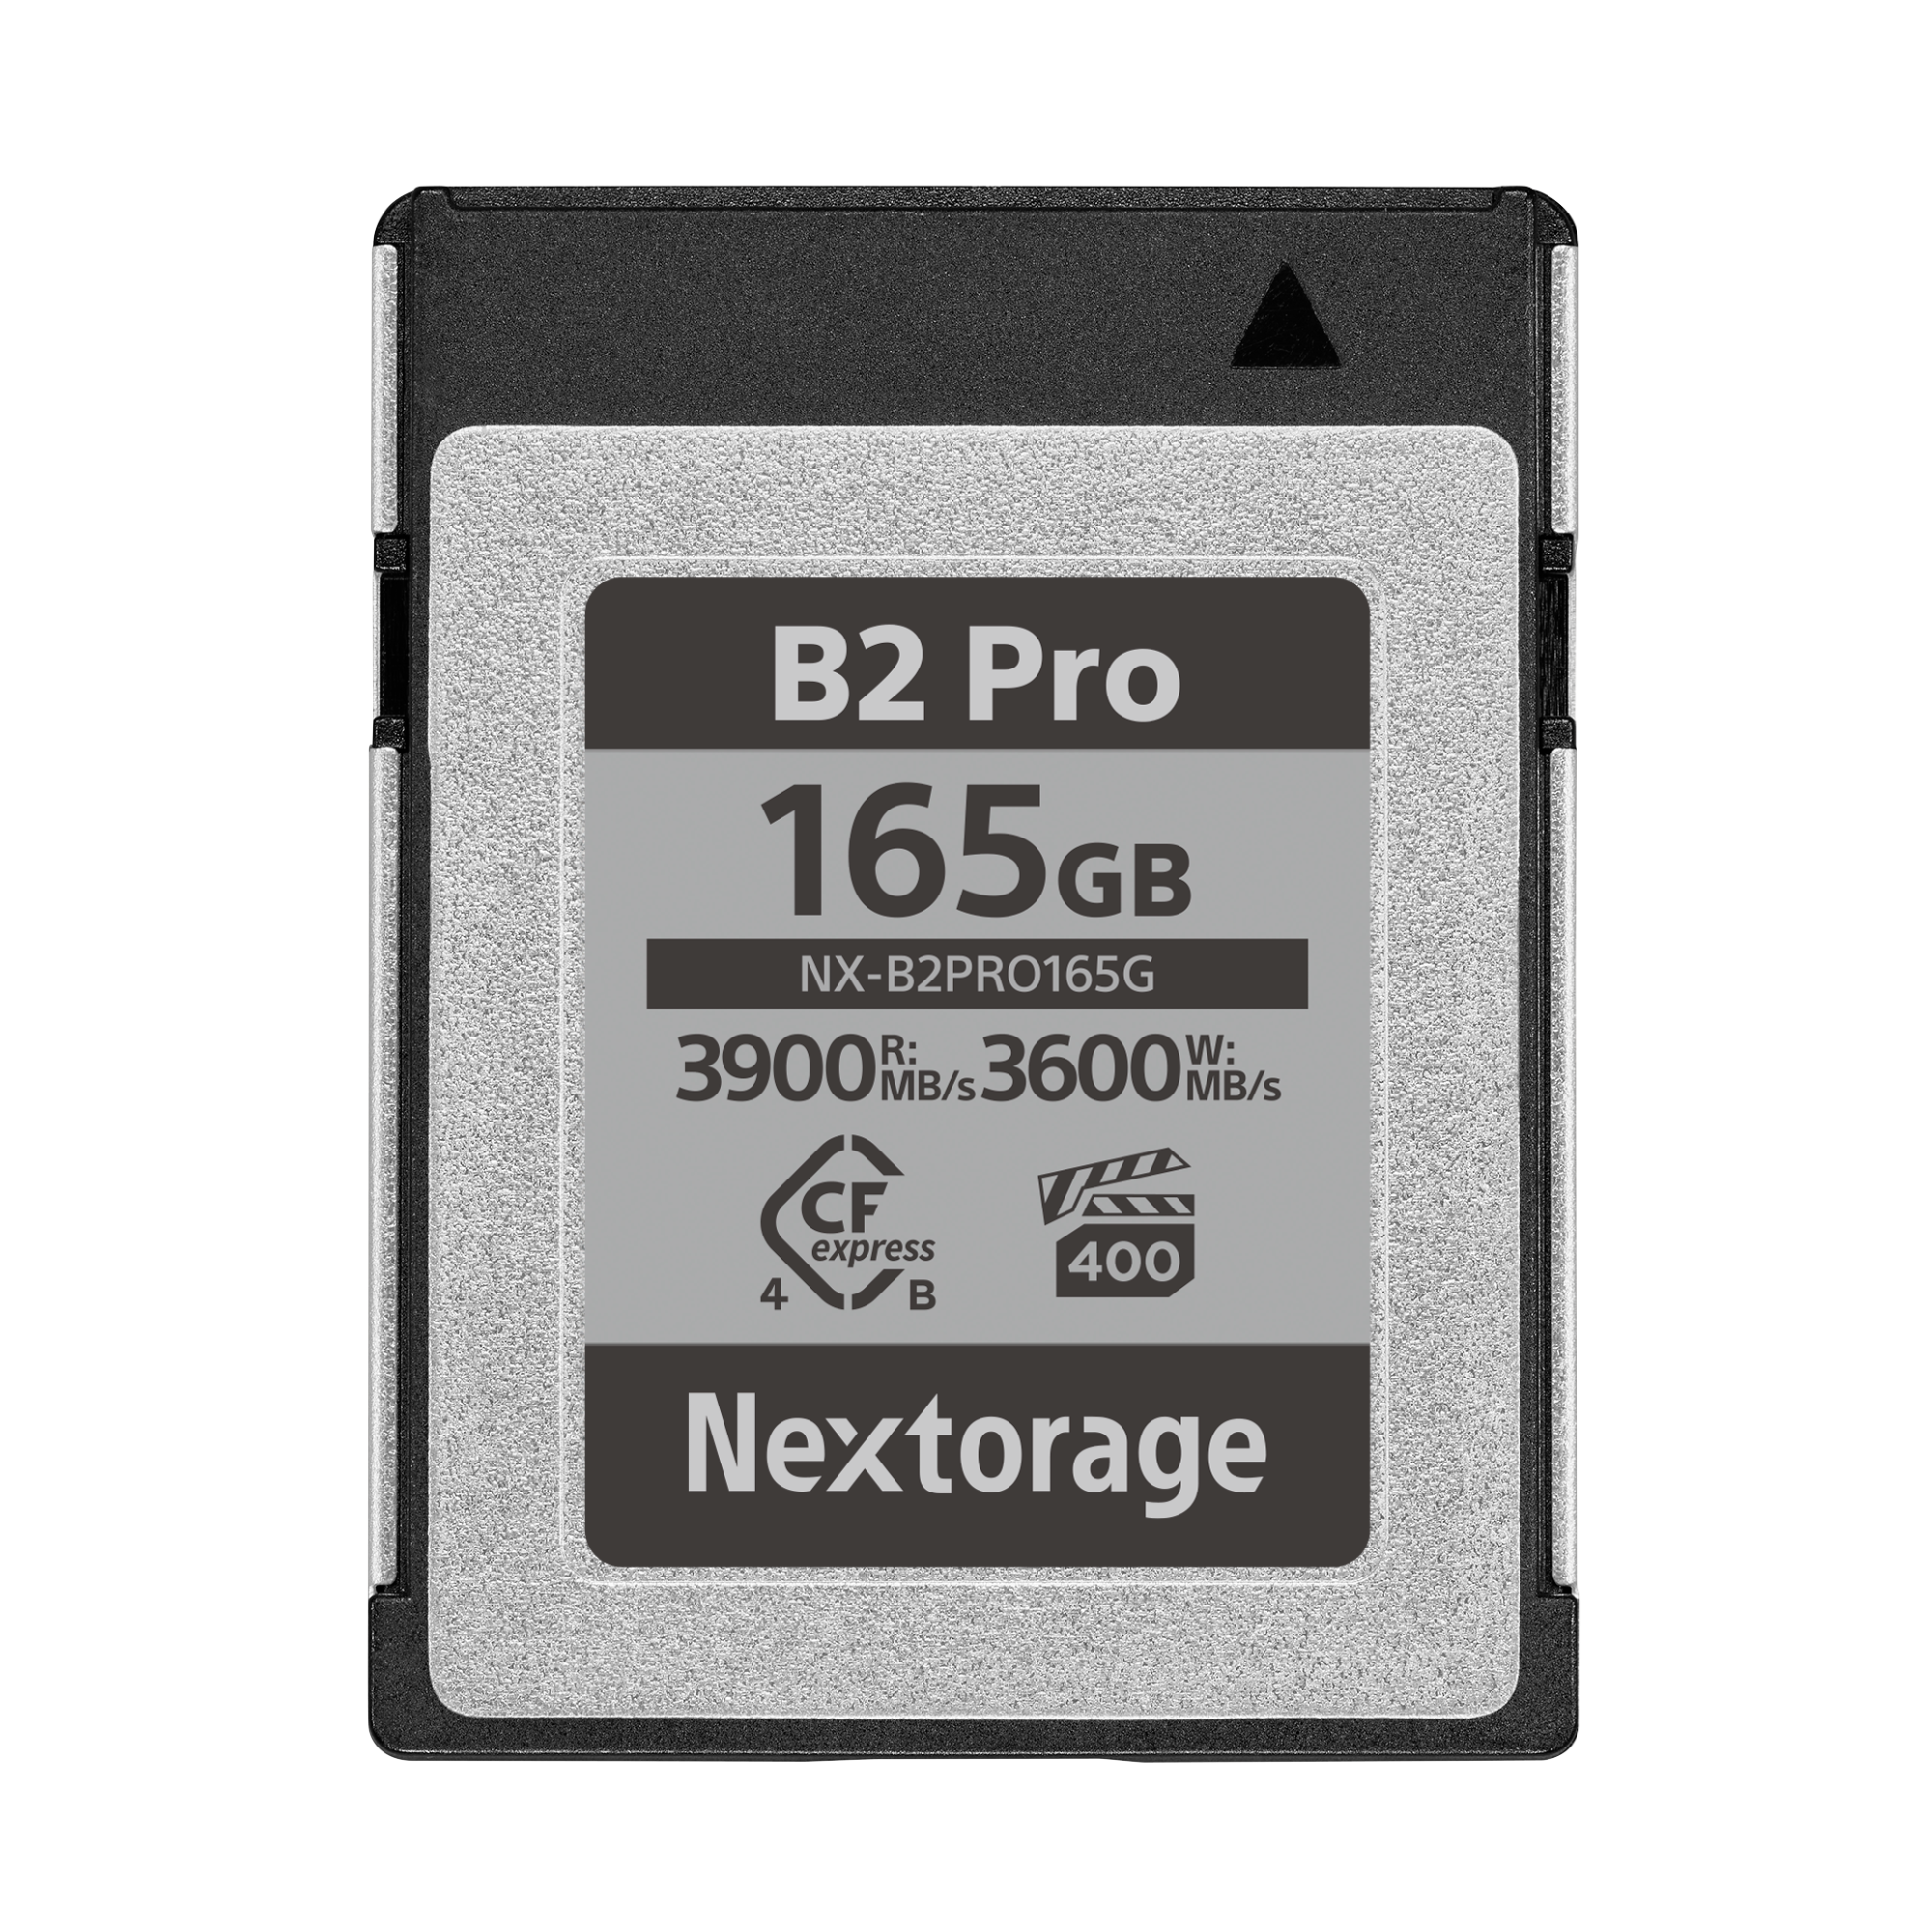 Nextorage CFexpress Type B Memory Card 165GB B2 Pro Series